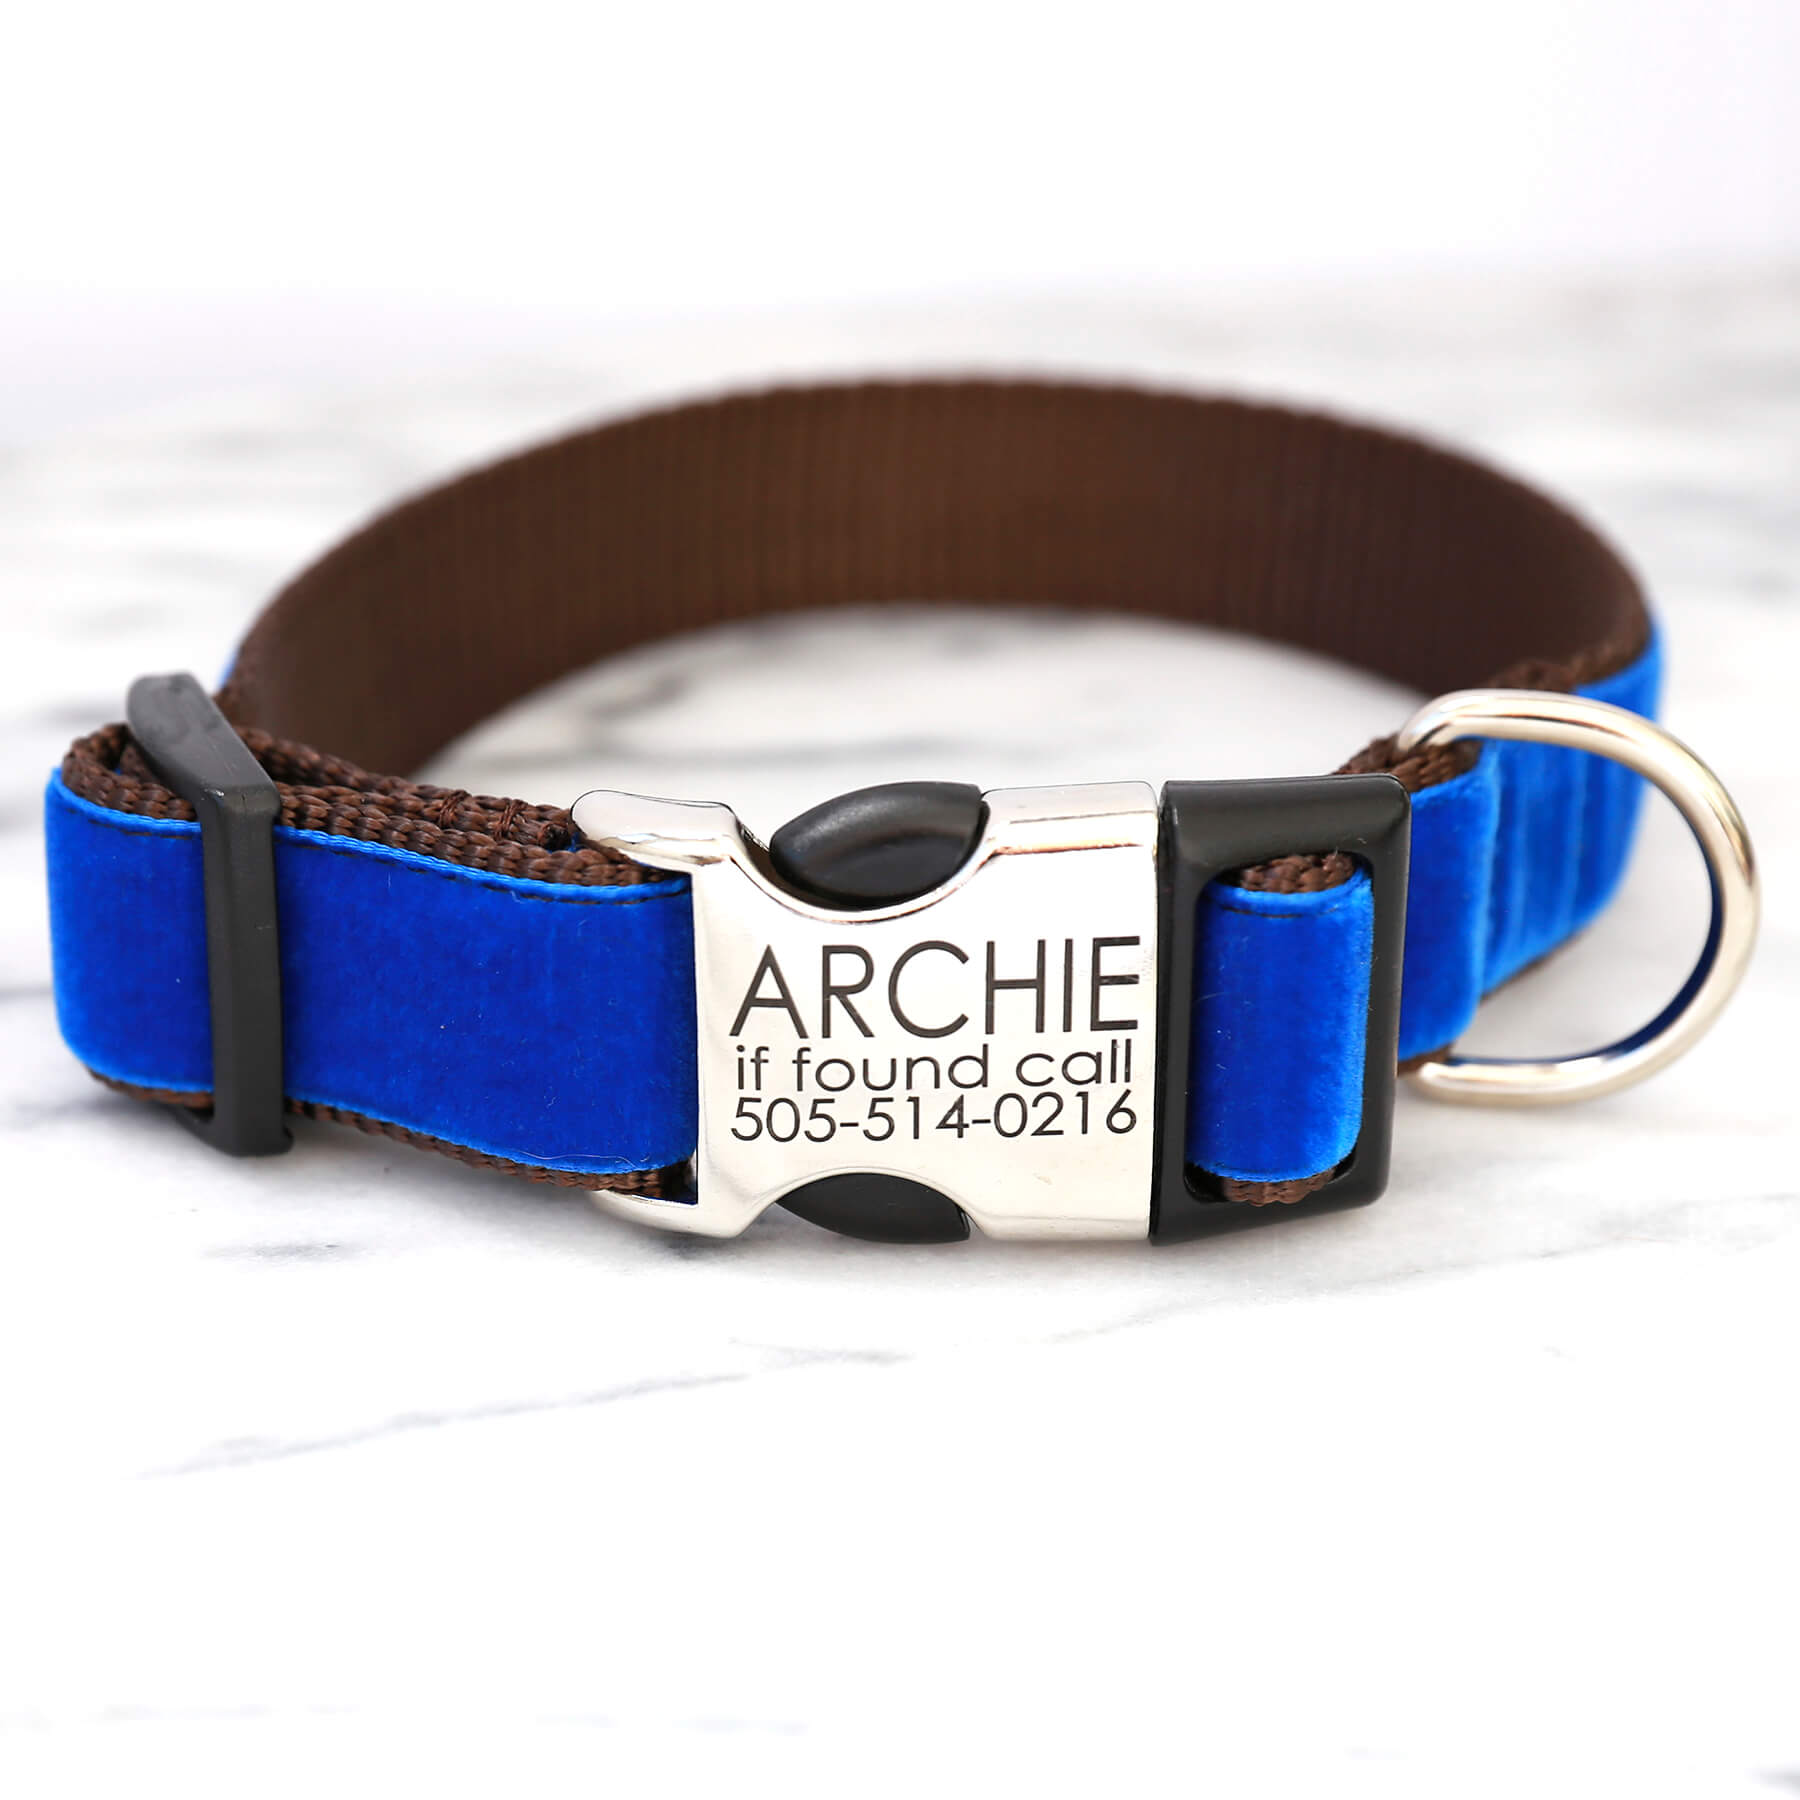 ROYAL BLUE Designer Dog Collar by ™ in British Dog Collar  Collection, Designer Dog Accessories